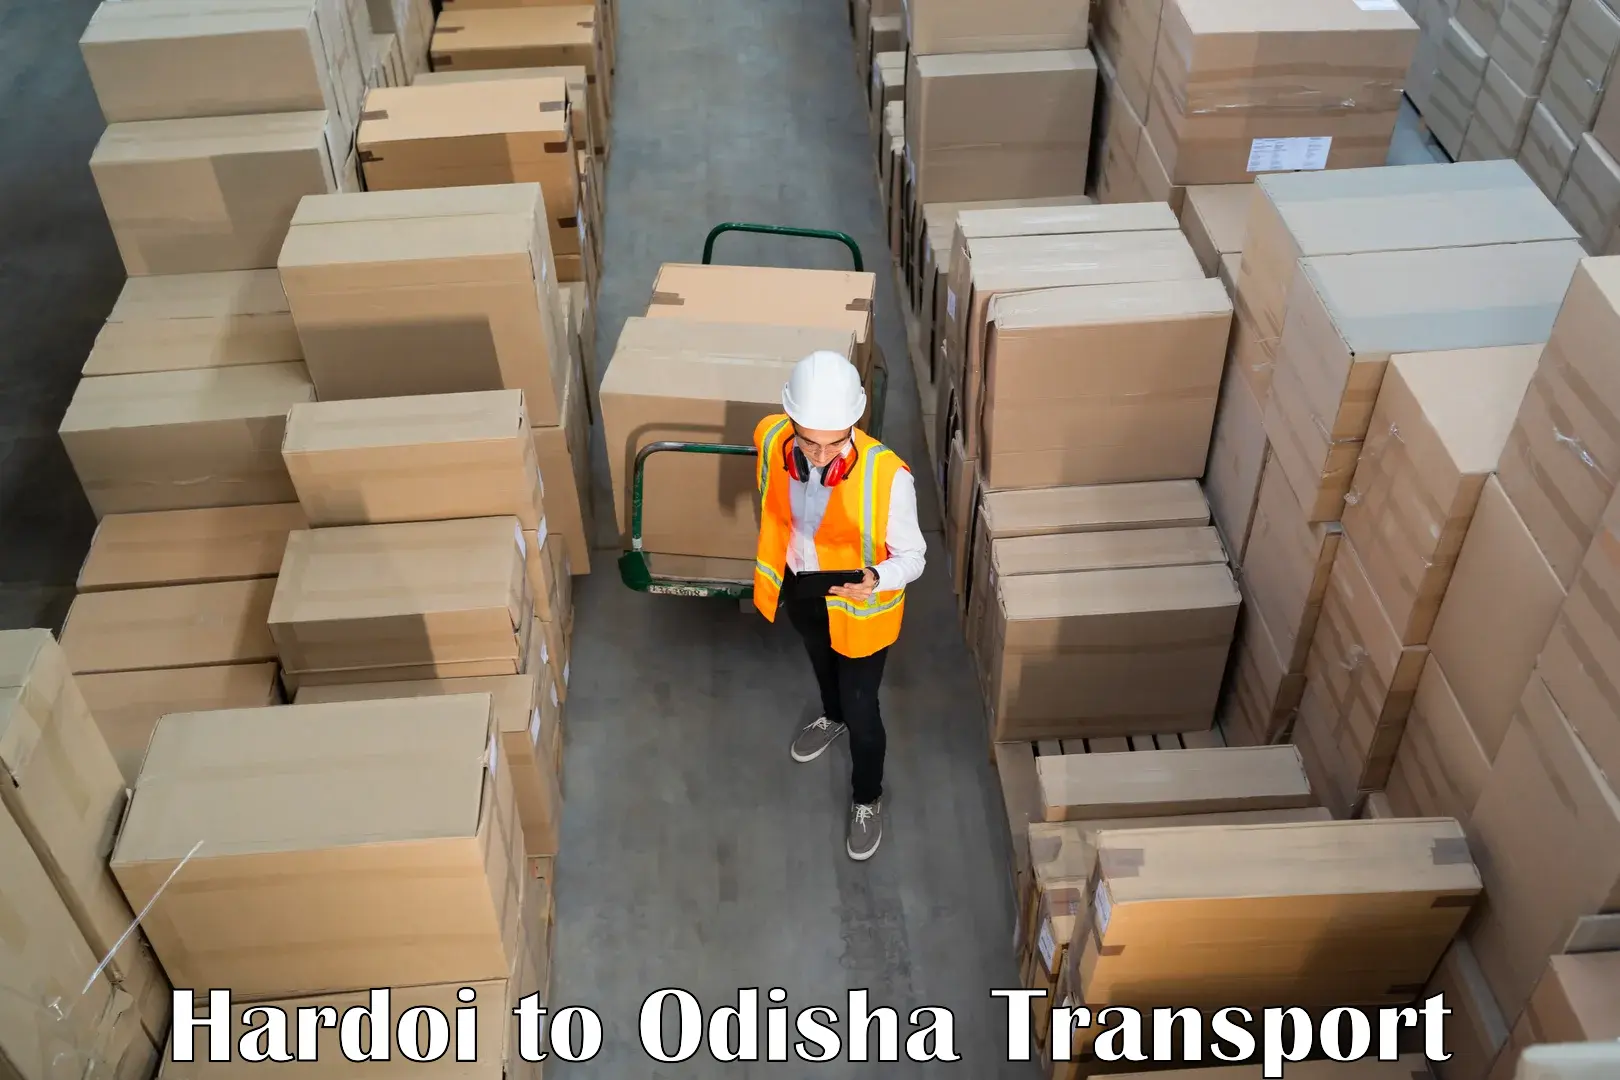 Delivery service Hardoi to Dandisahi